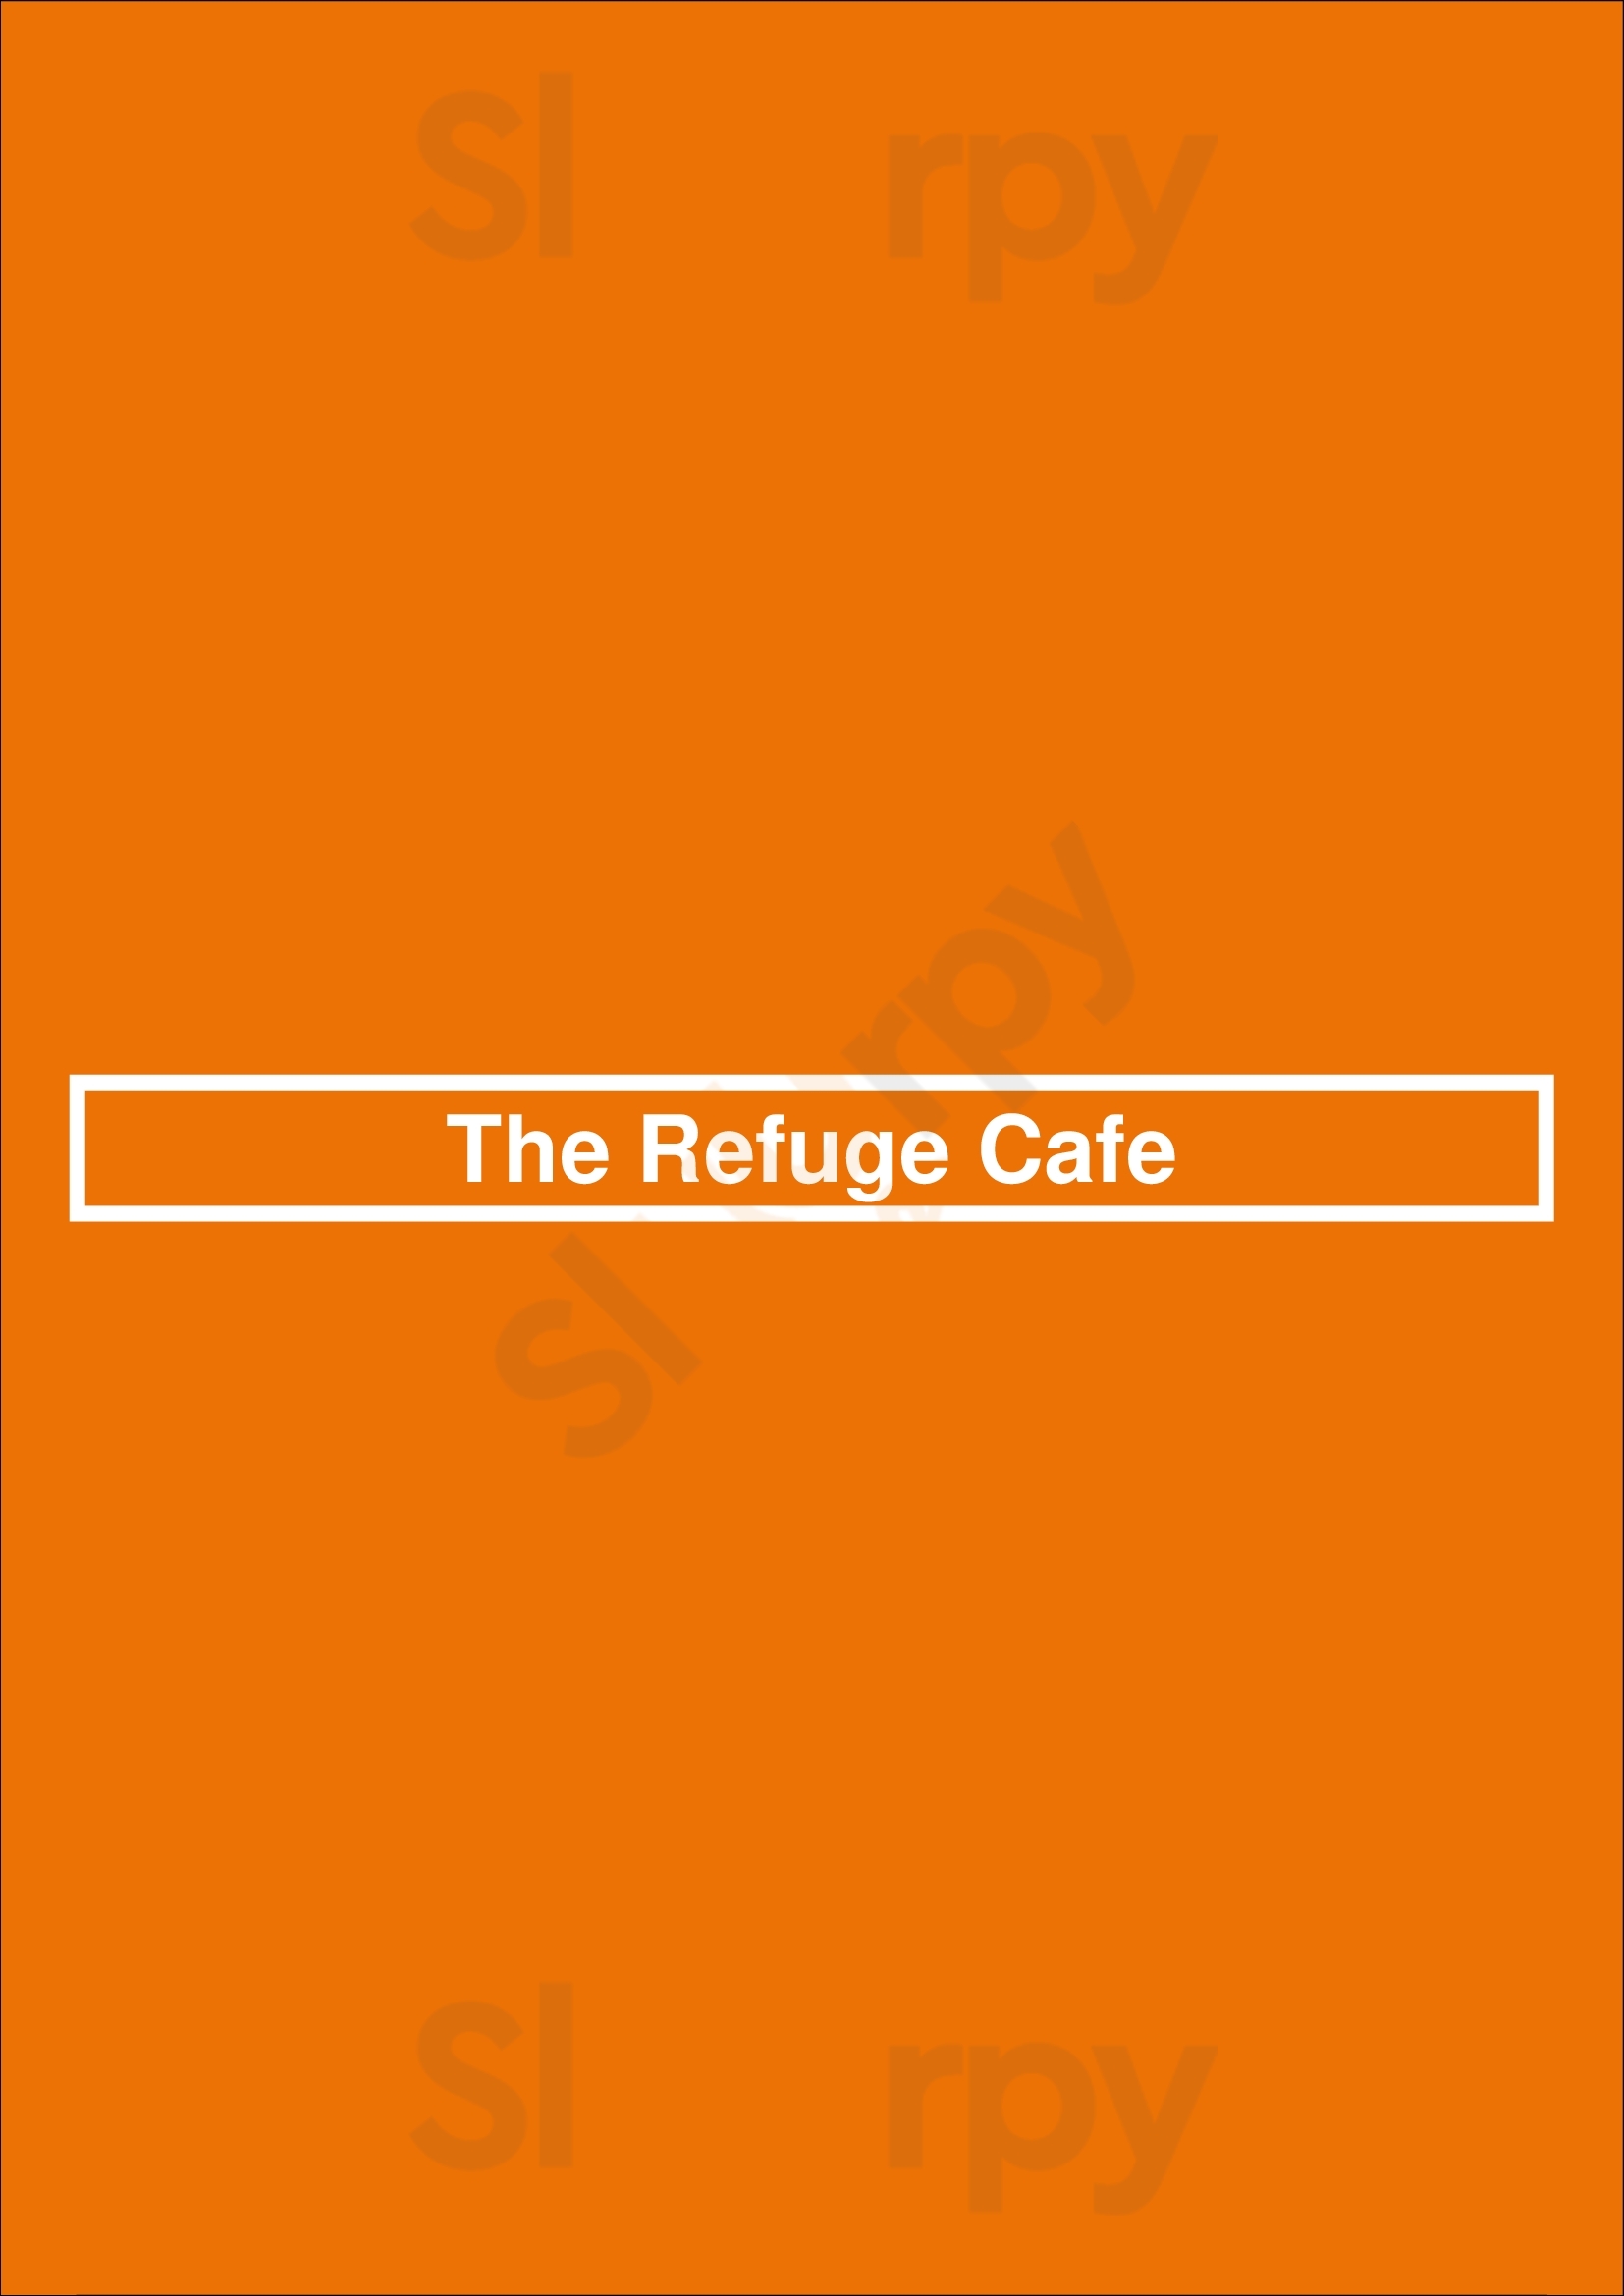 The Refuge Cafe Phoenix Menu - 1